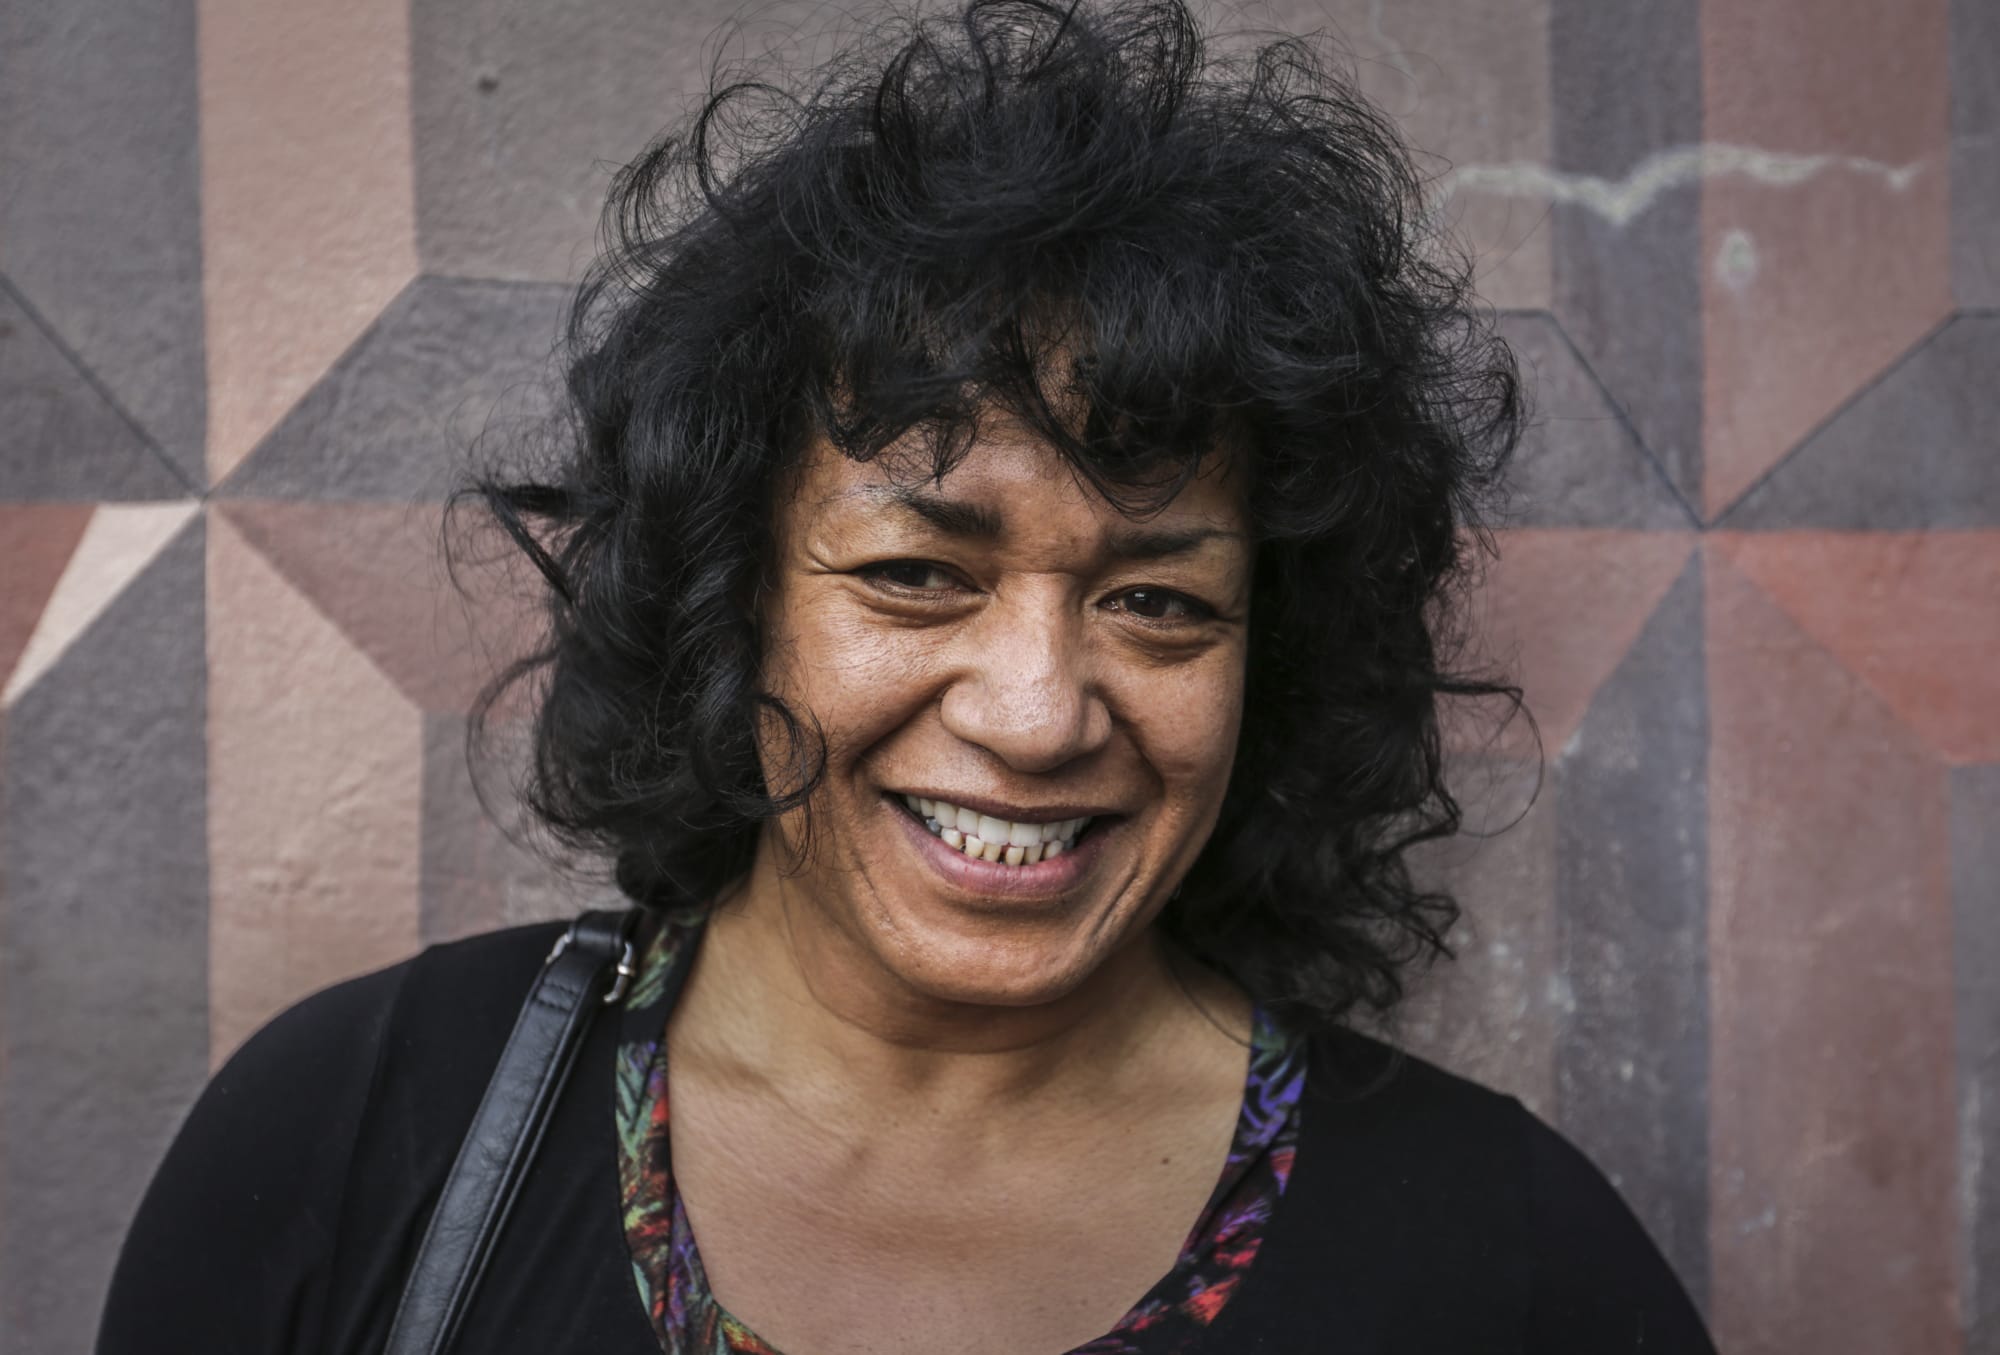 Smiling Maori lady